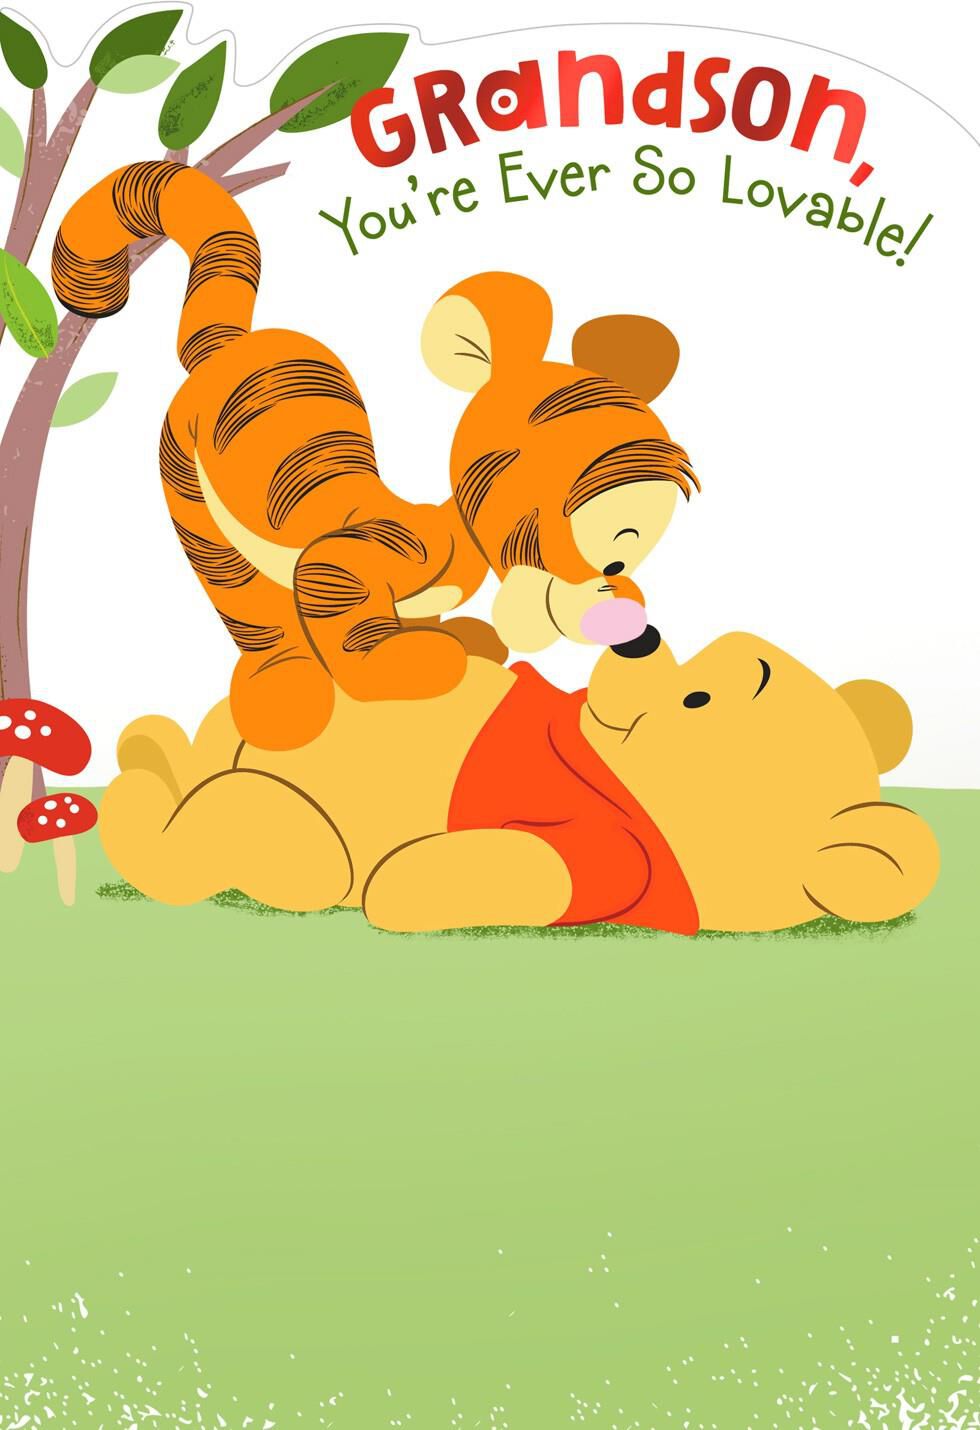 Winnie the Pooh Birthday Card for Grandson - Greeting Cards - Hallmark